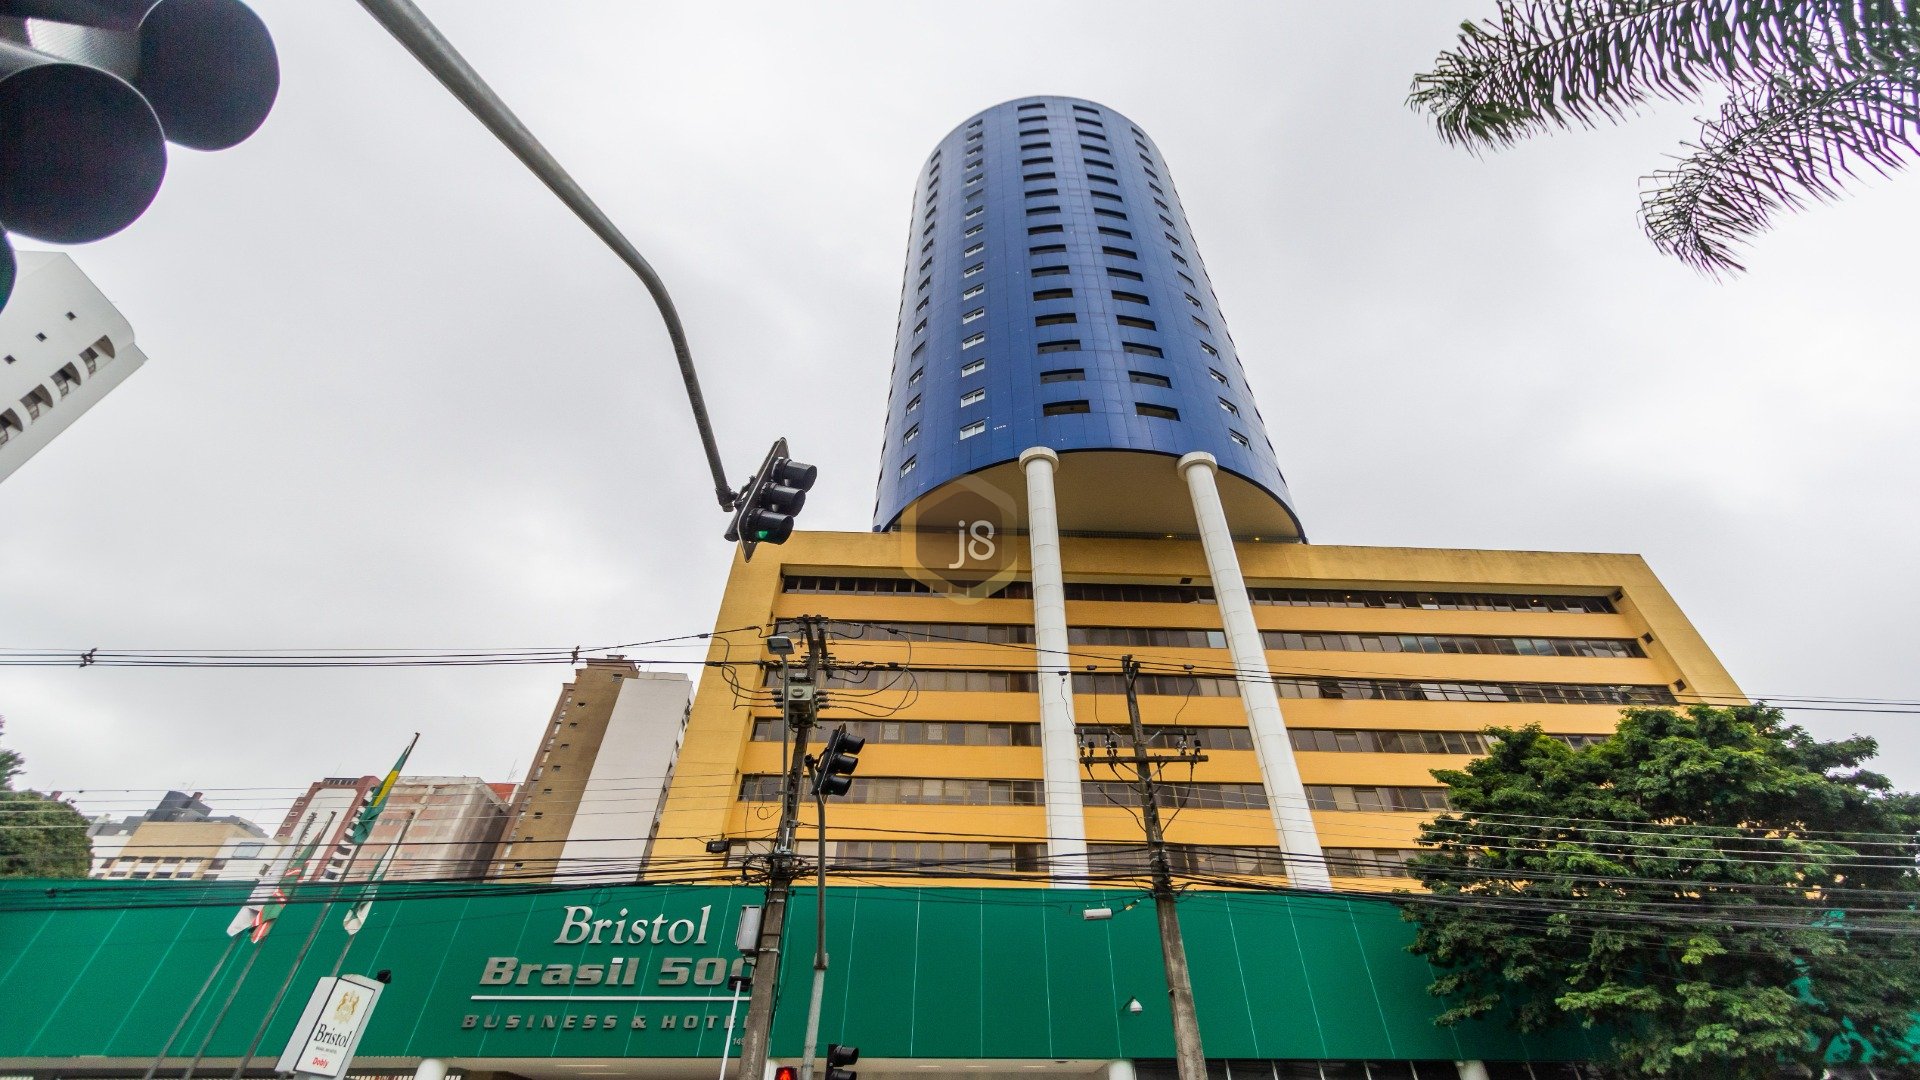 Bristol Brasil 500 - Bristol Hotéis & Resorts